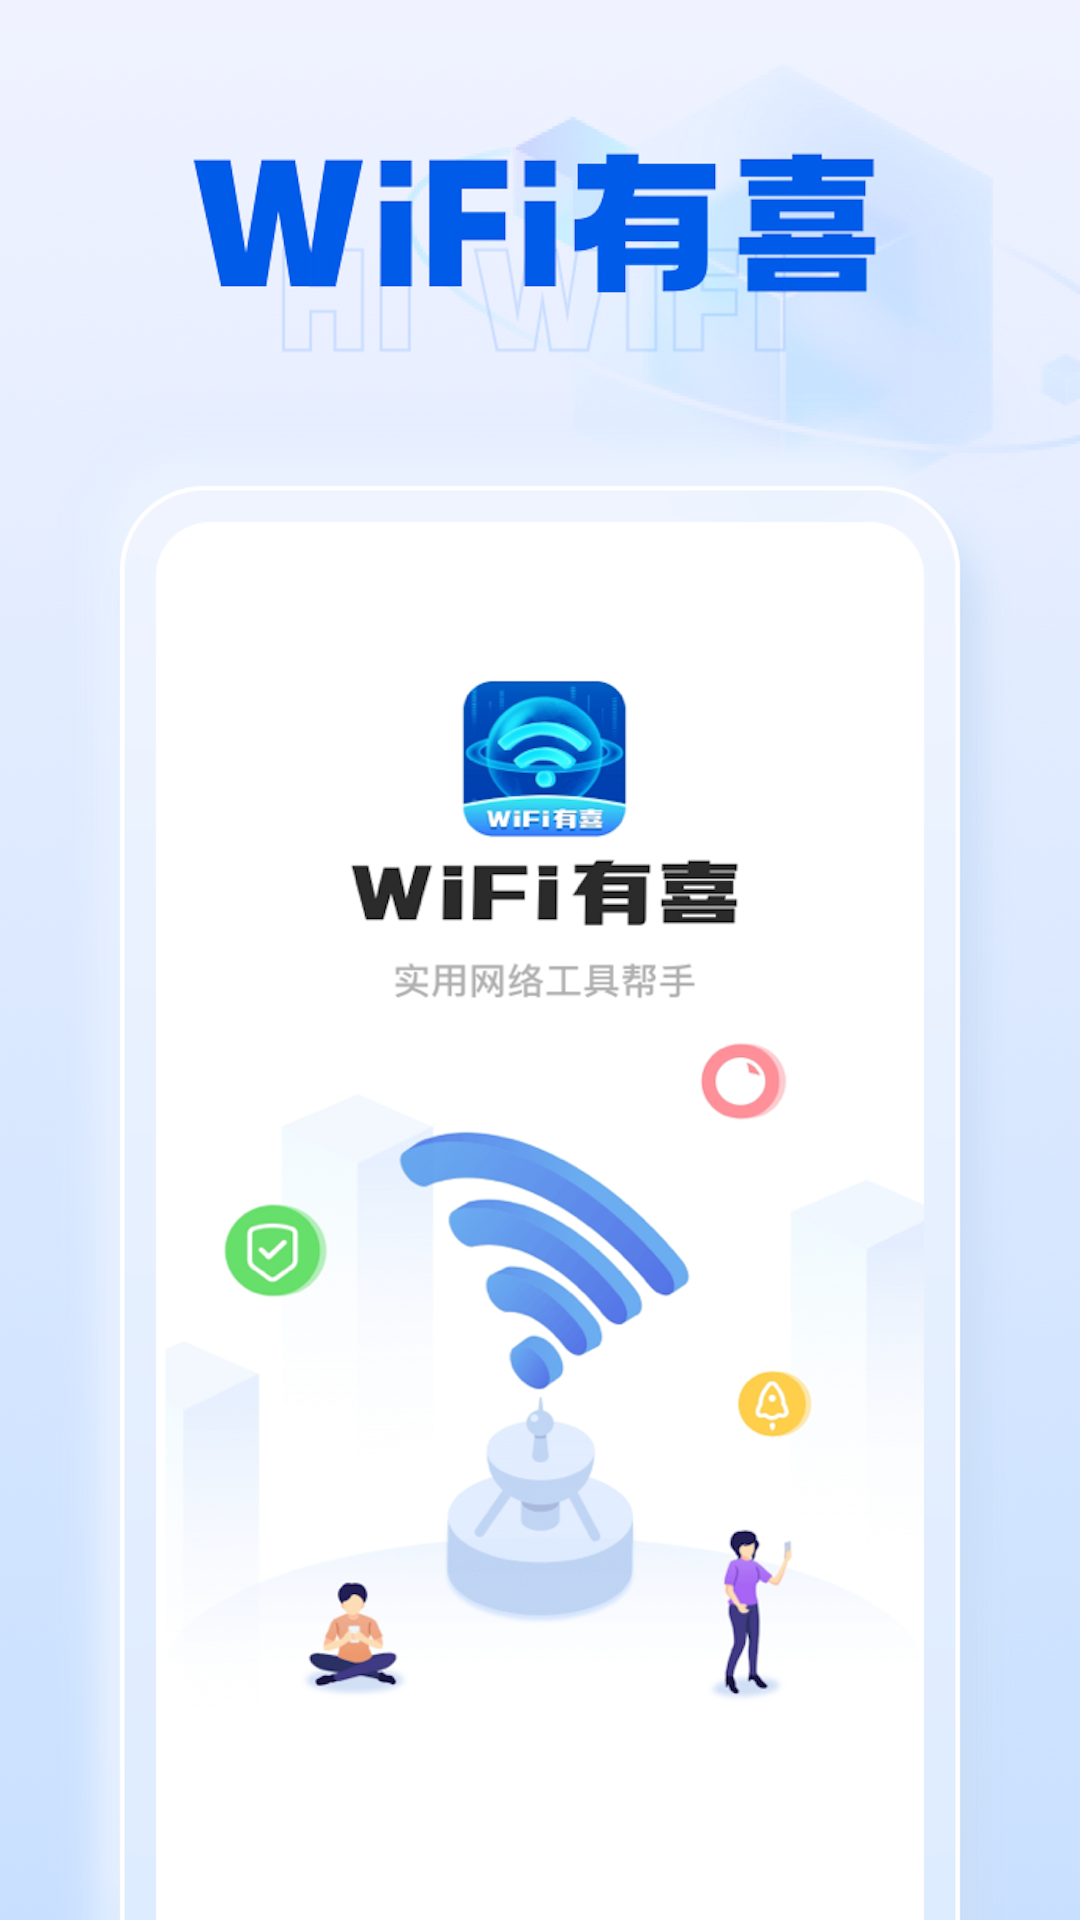 WiFi有喜网络测速APP官方版图2: